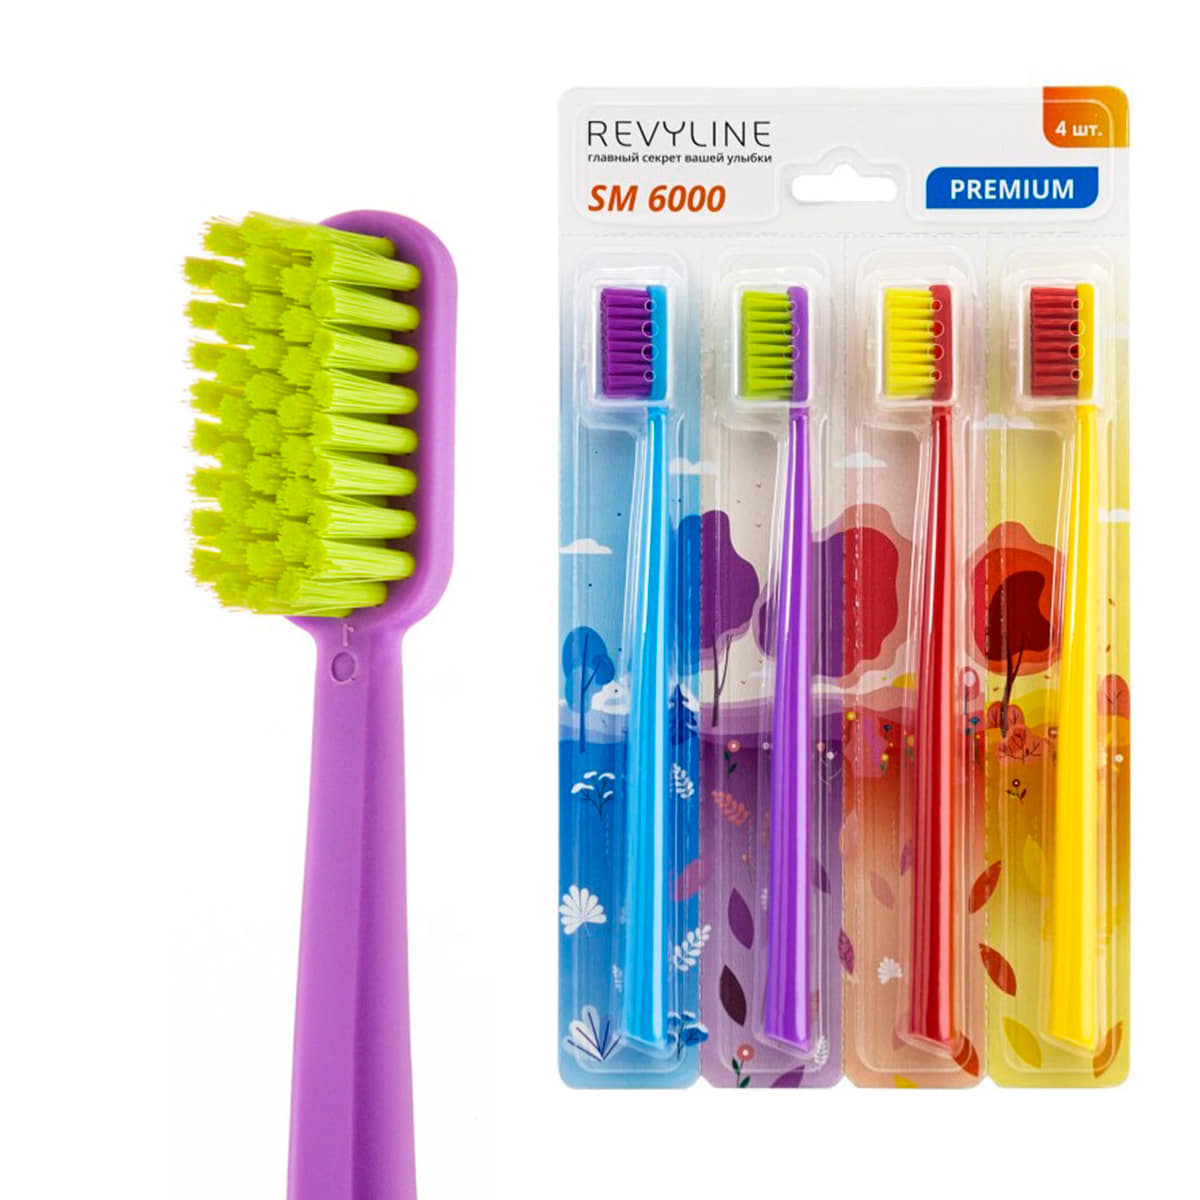 Набор зубных щеток Revyline revyline набор зубных щеток sm5000 6 шт